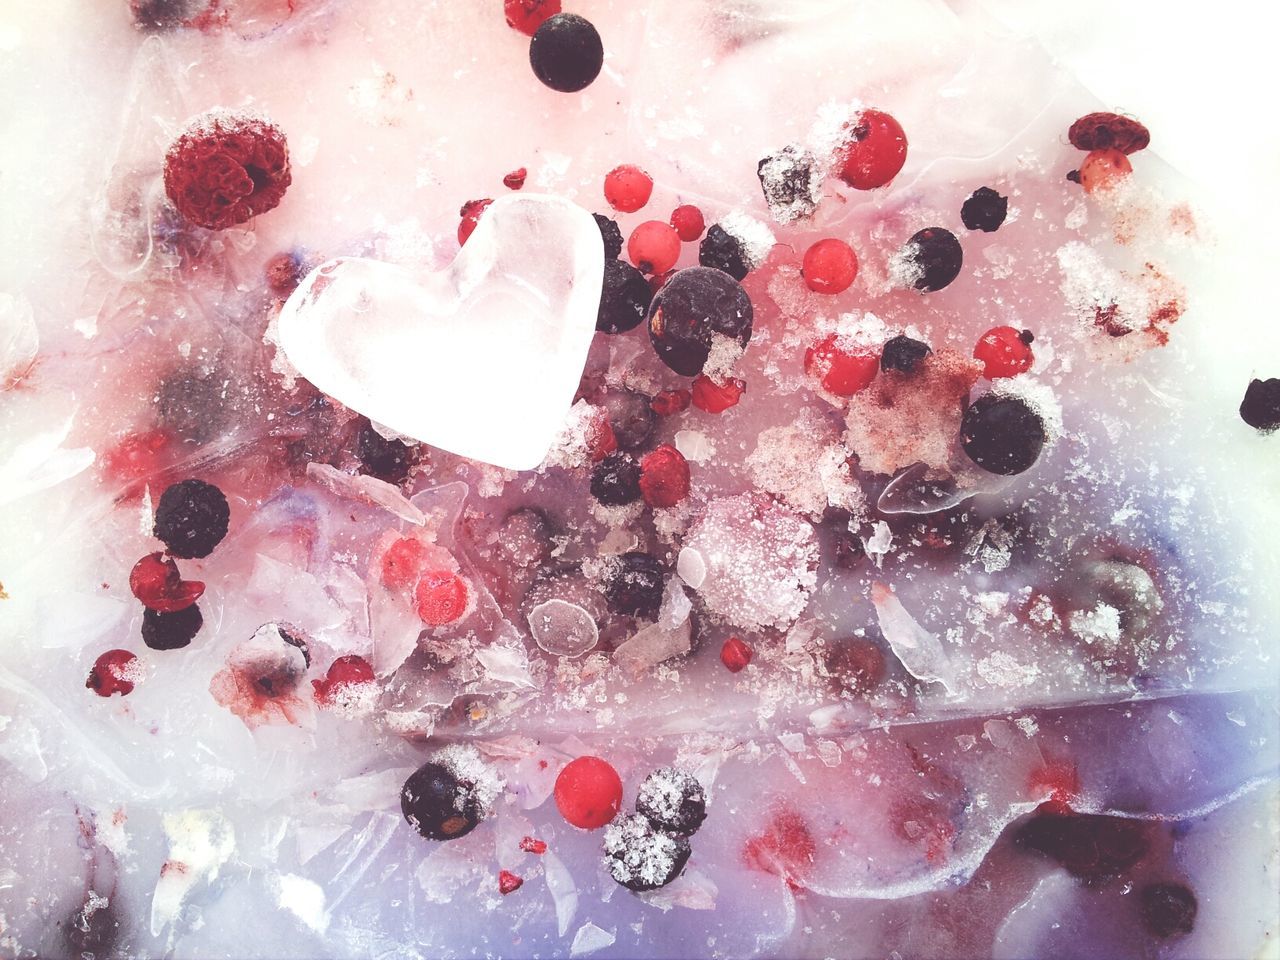 Frozen heart shape ice and berries